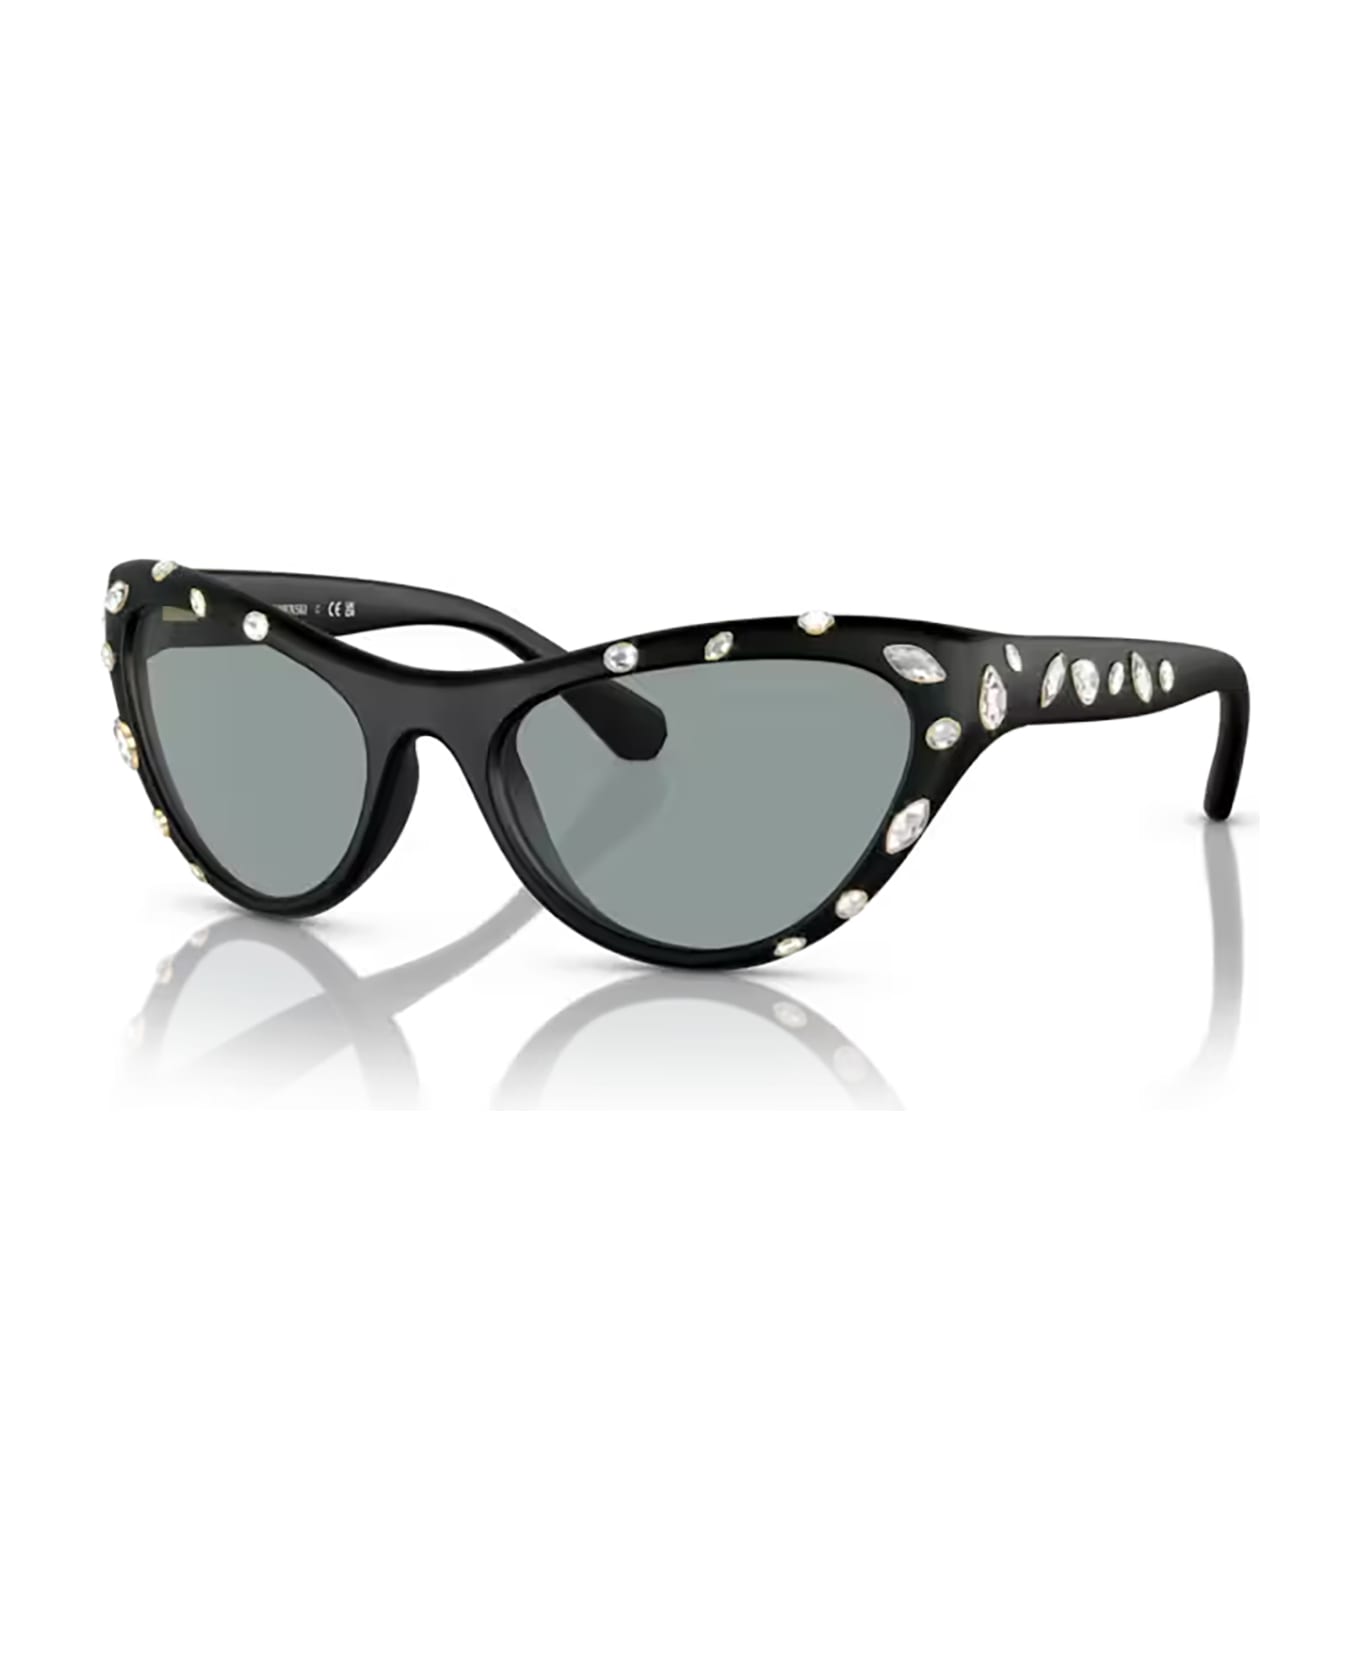 Swarovski Sk6007 Matte Black Sunglasses - Matte Black サングラス